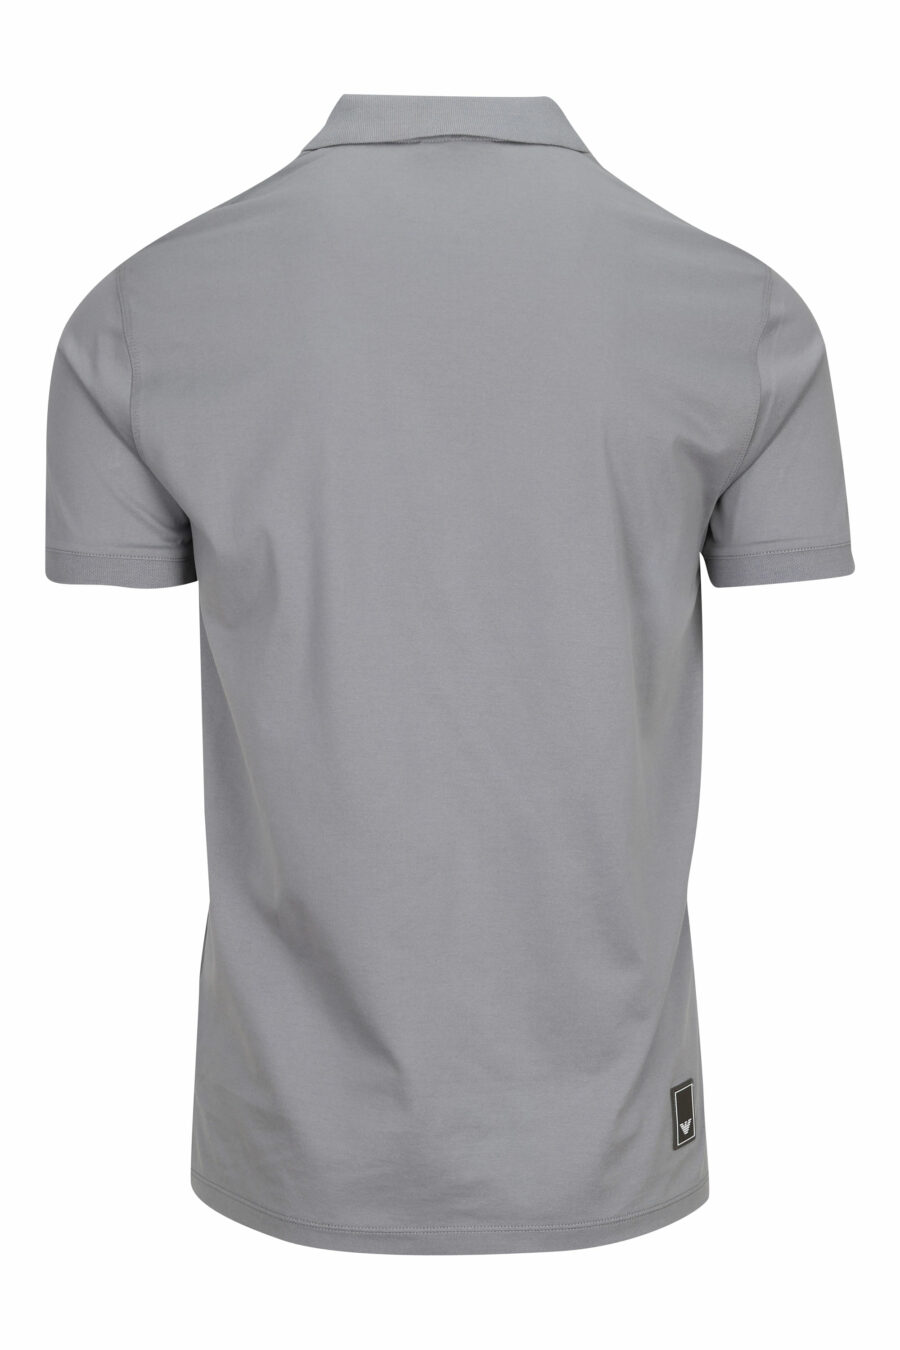 Graues Poloshirt mit monochromem Adler-Mini-Logo - 8058997613835